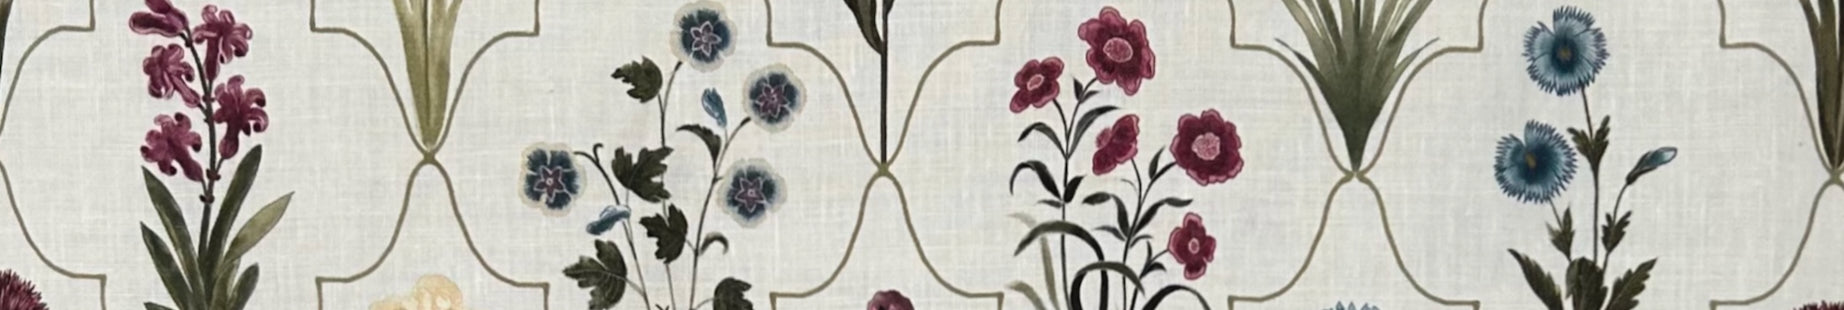 Botanica Trading Textiles | Fabric